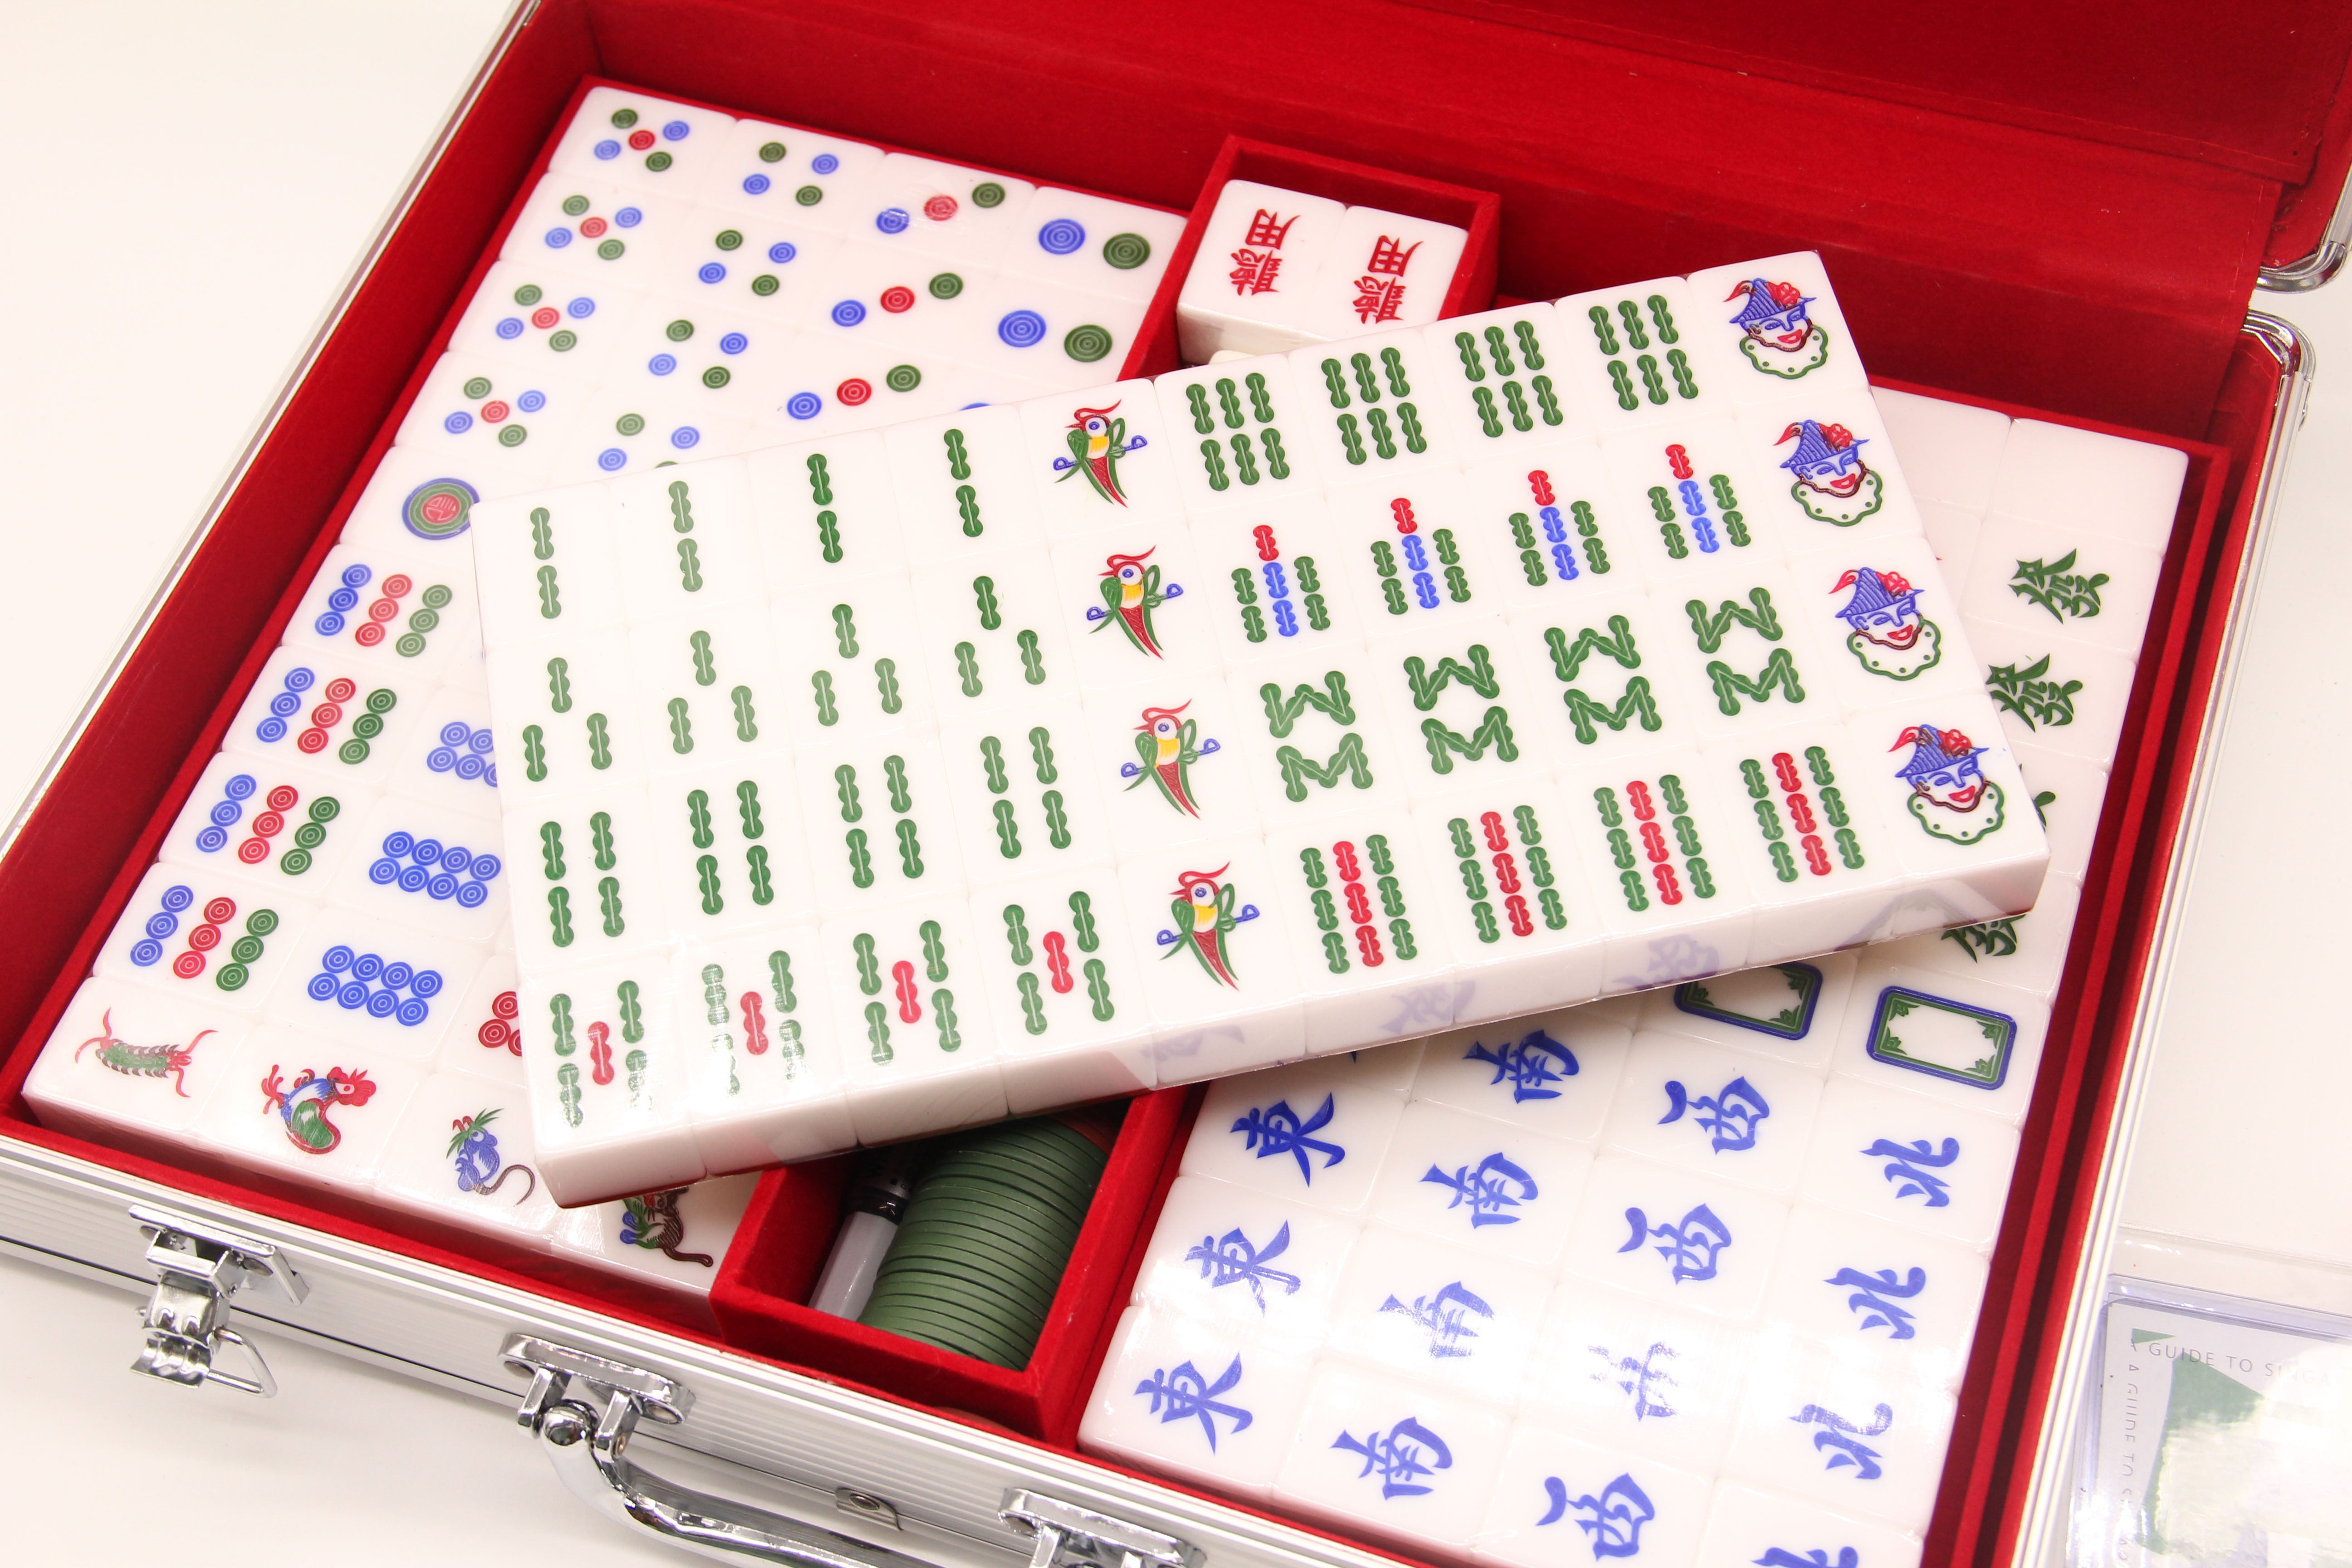 WSA Luxurious Singapore Mahjong Set (Metallic Gold)